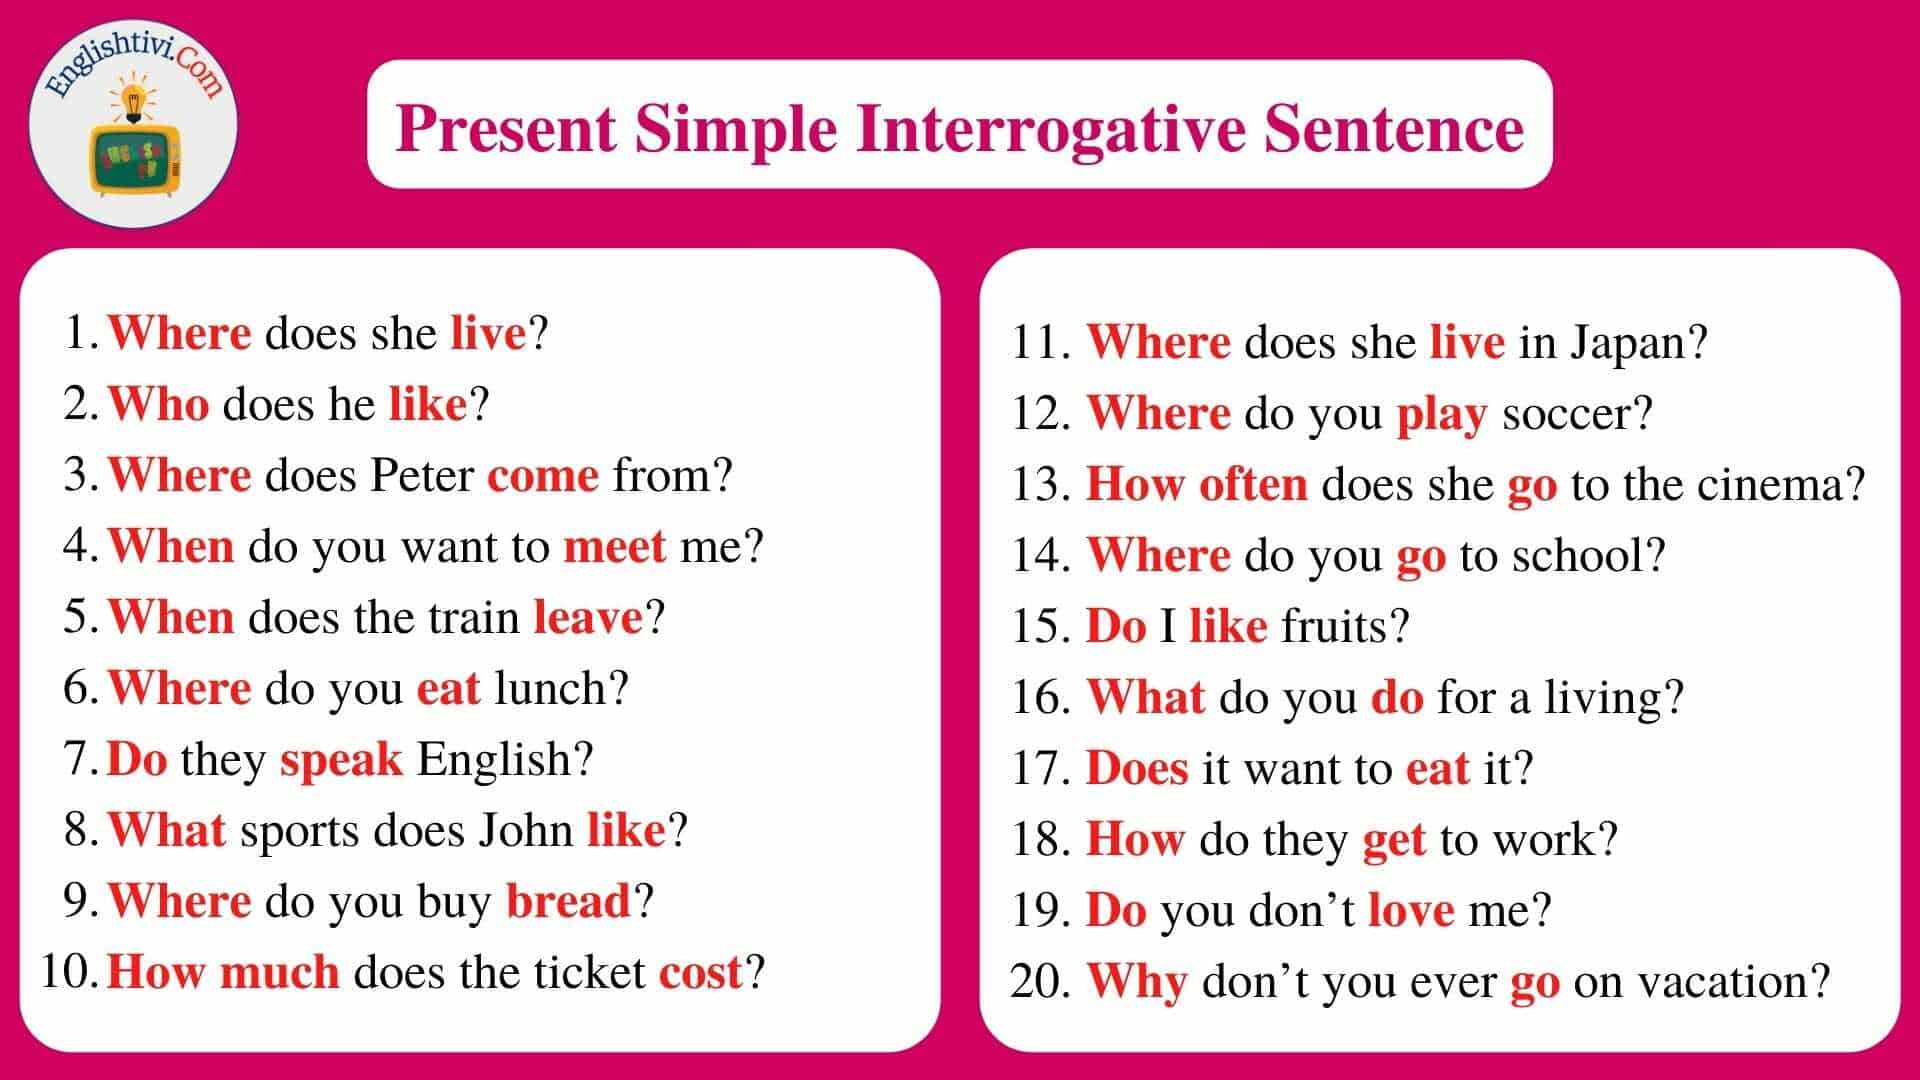 Present Simple Interrogative Sentence